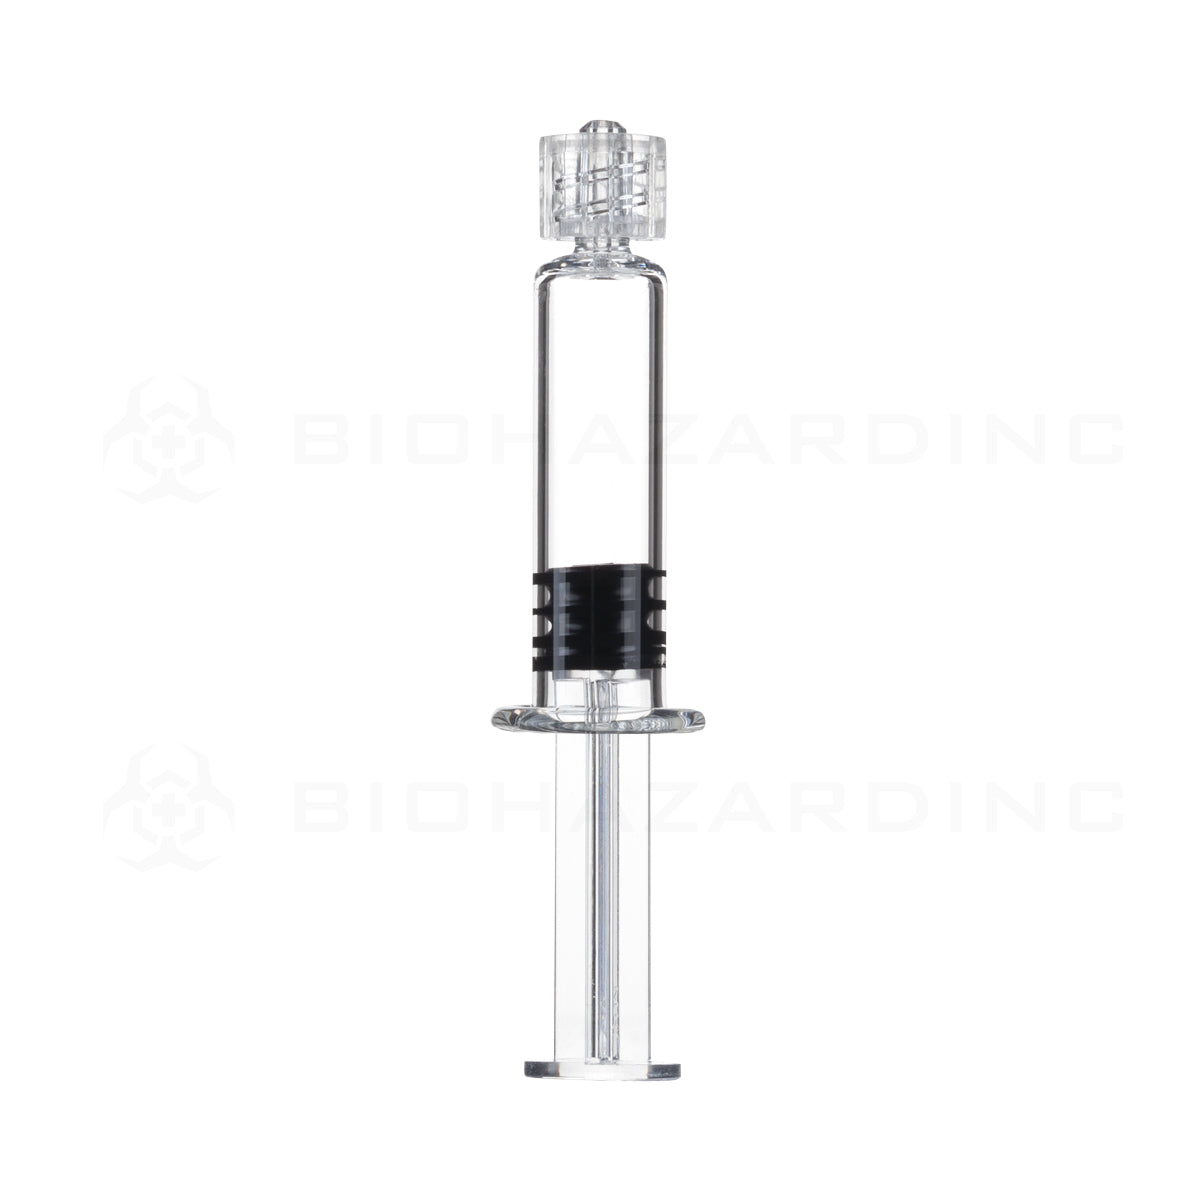 Luer Lock | Concentrate Glass Syringe | 1ml - No Measurement - 100 Count Syringe Biohazard Inc   